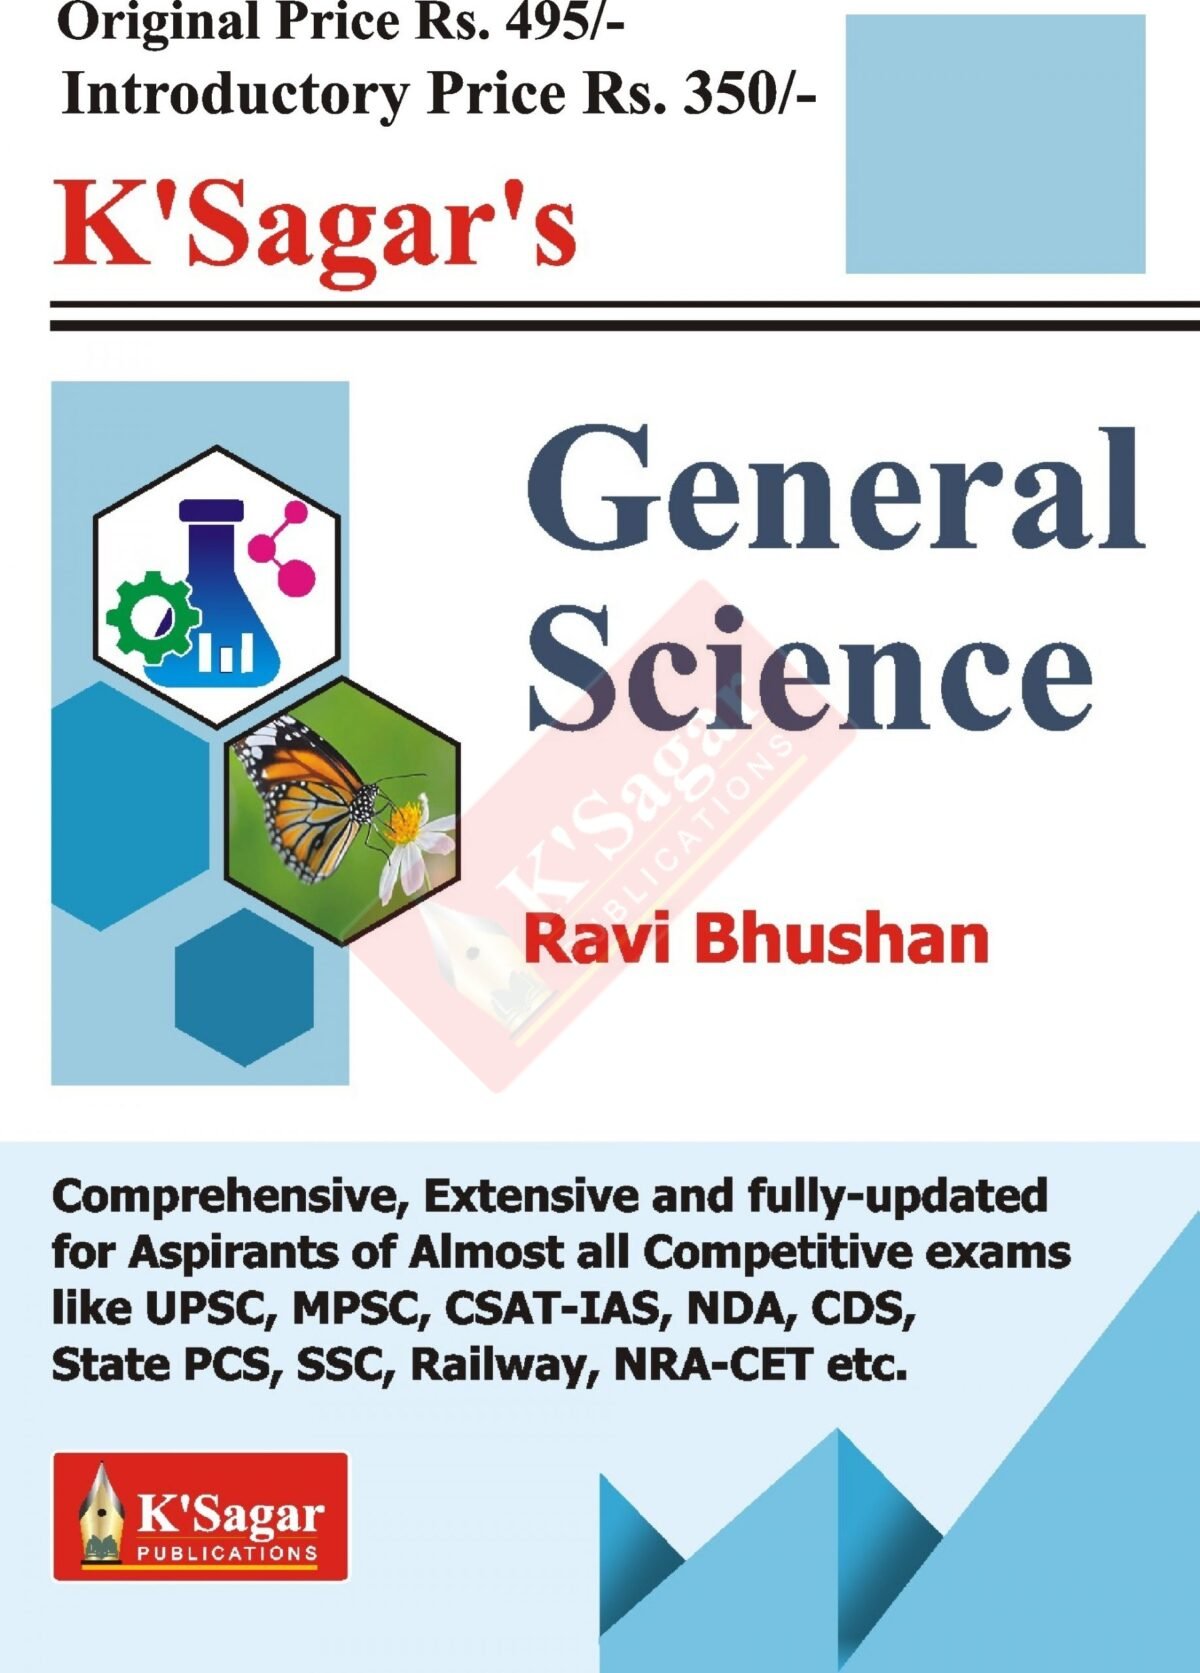 K'Sagar's General Science (Original Price Rs. 495/- Introductory Price Rs. 350/-)